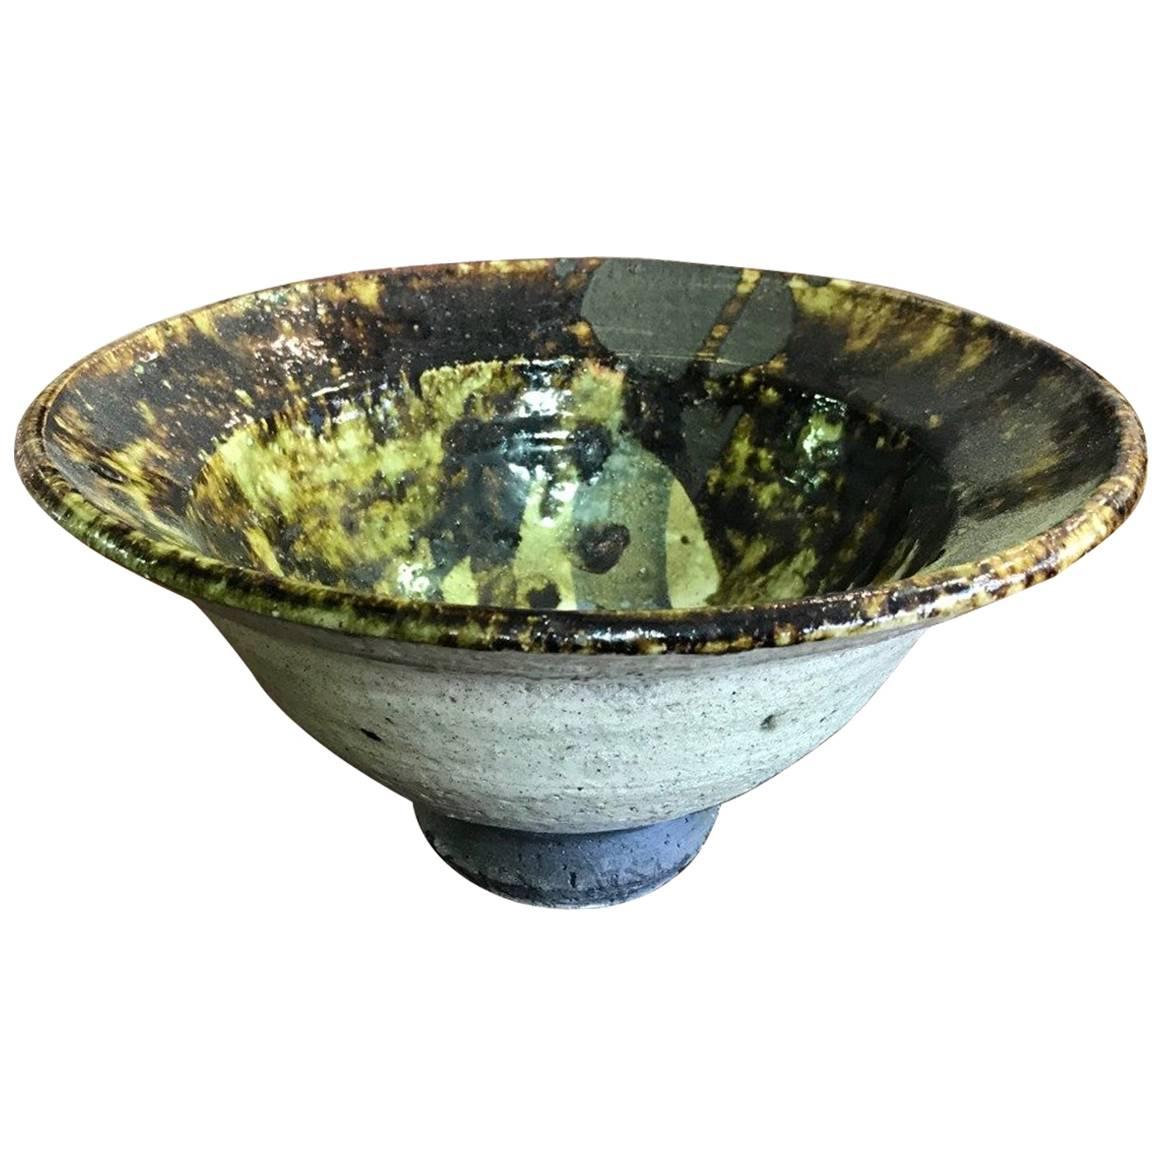 Paul Soldner Large Raku Fired Ceramic Pottery Bowl